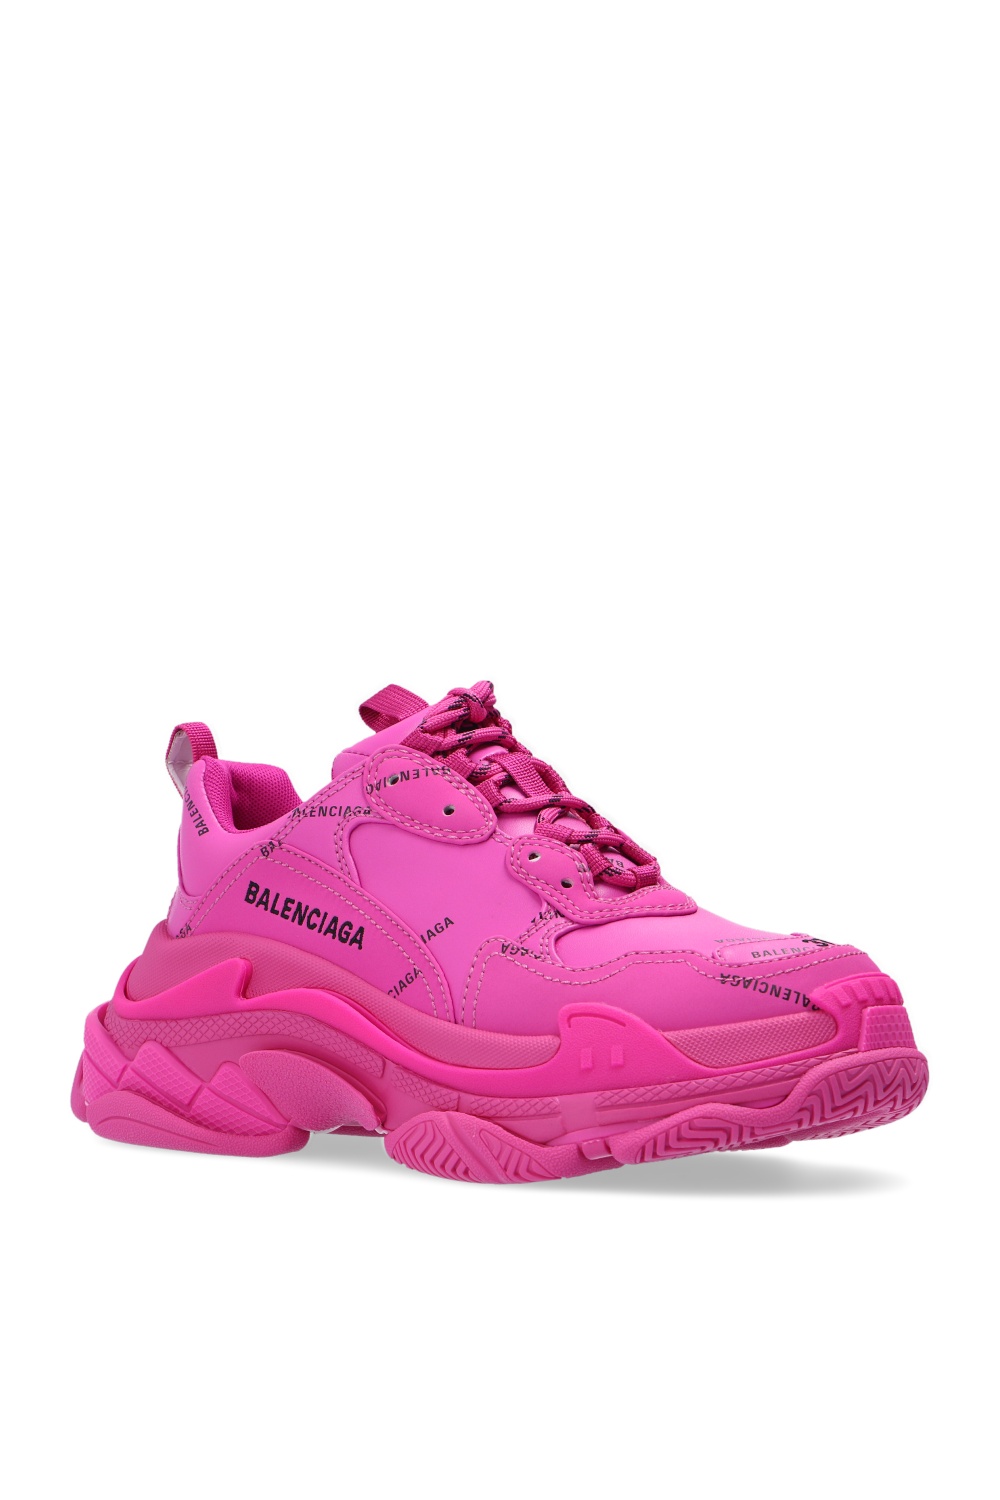 Balenciaga Pink Triple S sneakers Browns